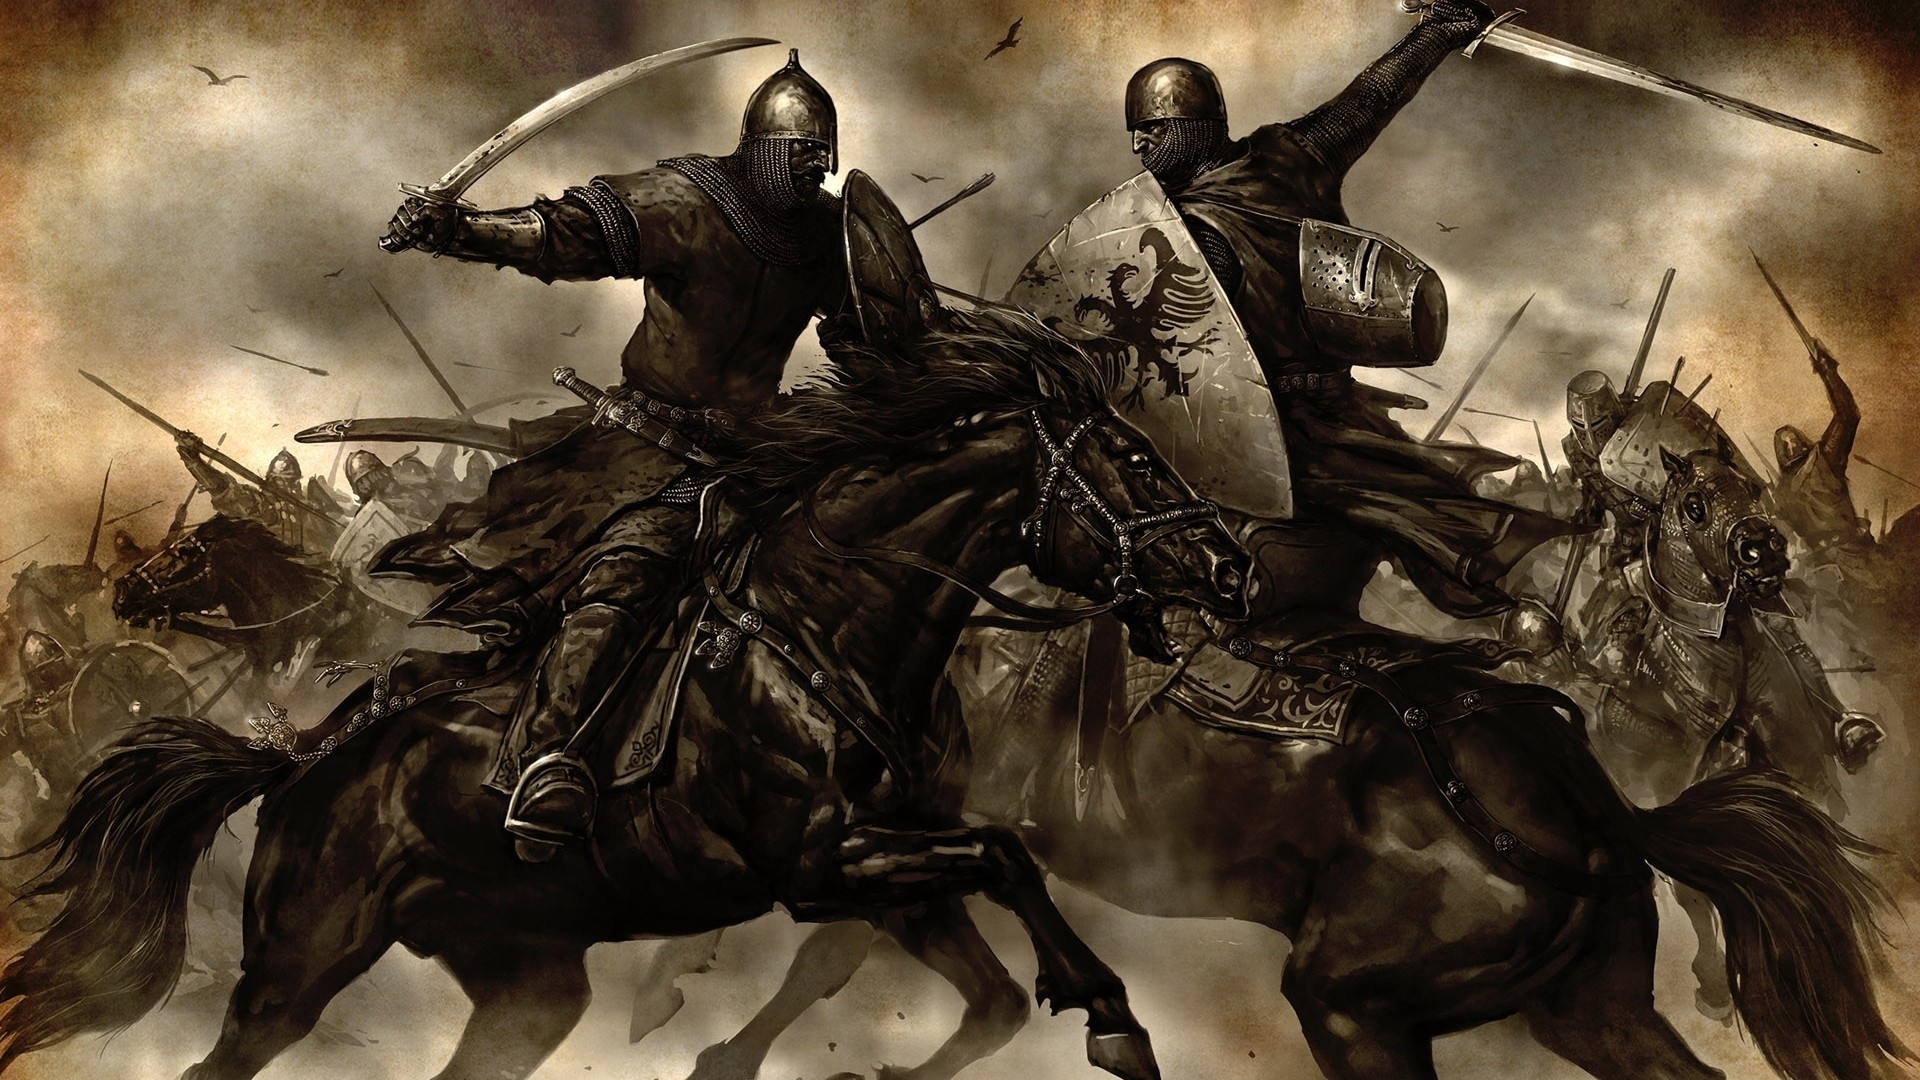 General 1920x1080 fantasy art knight Mount and Blade soldier horse war artwork men